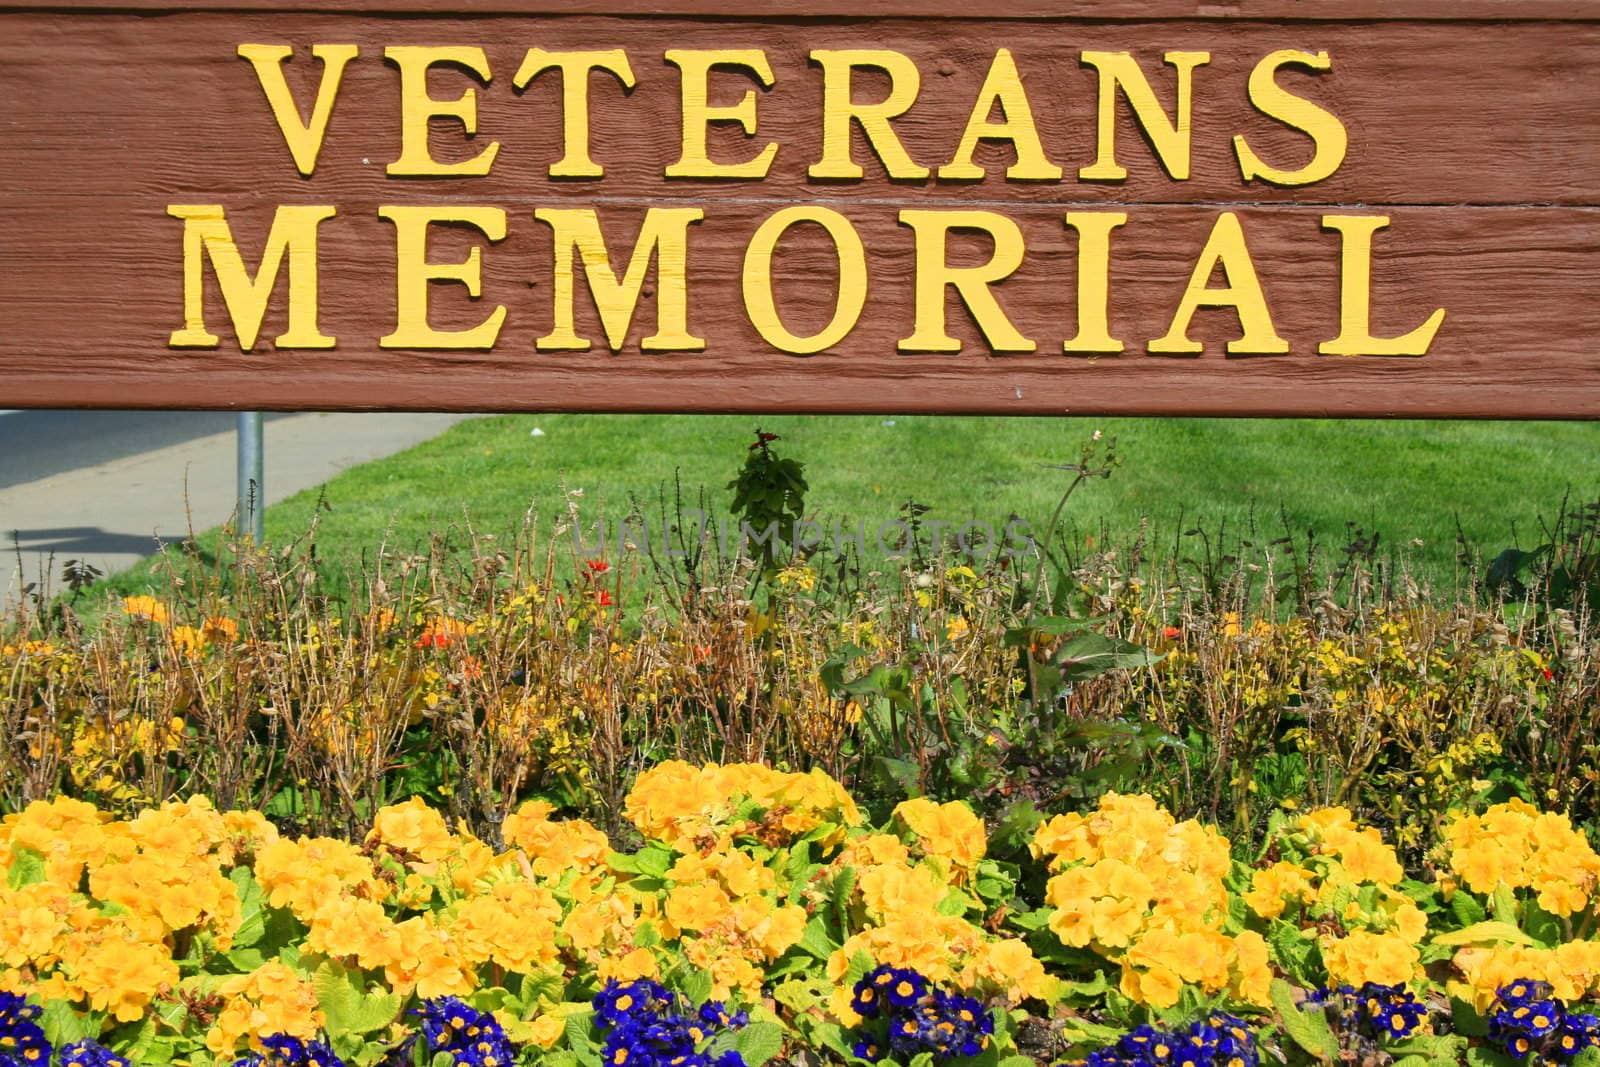 Close up of a veterans memorial sign.
